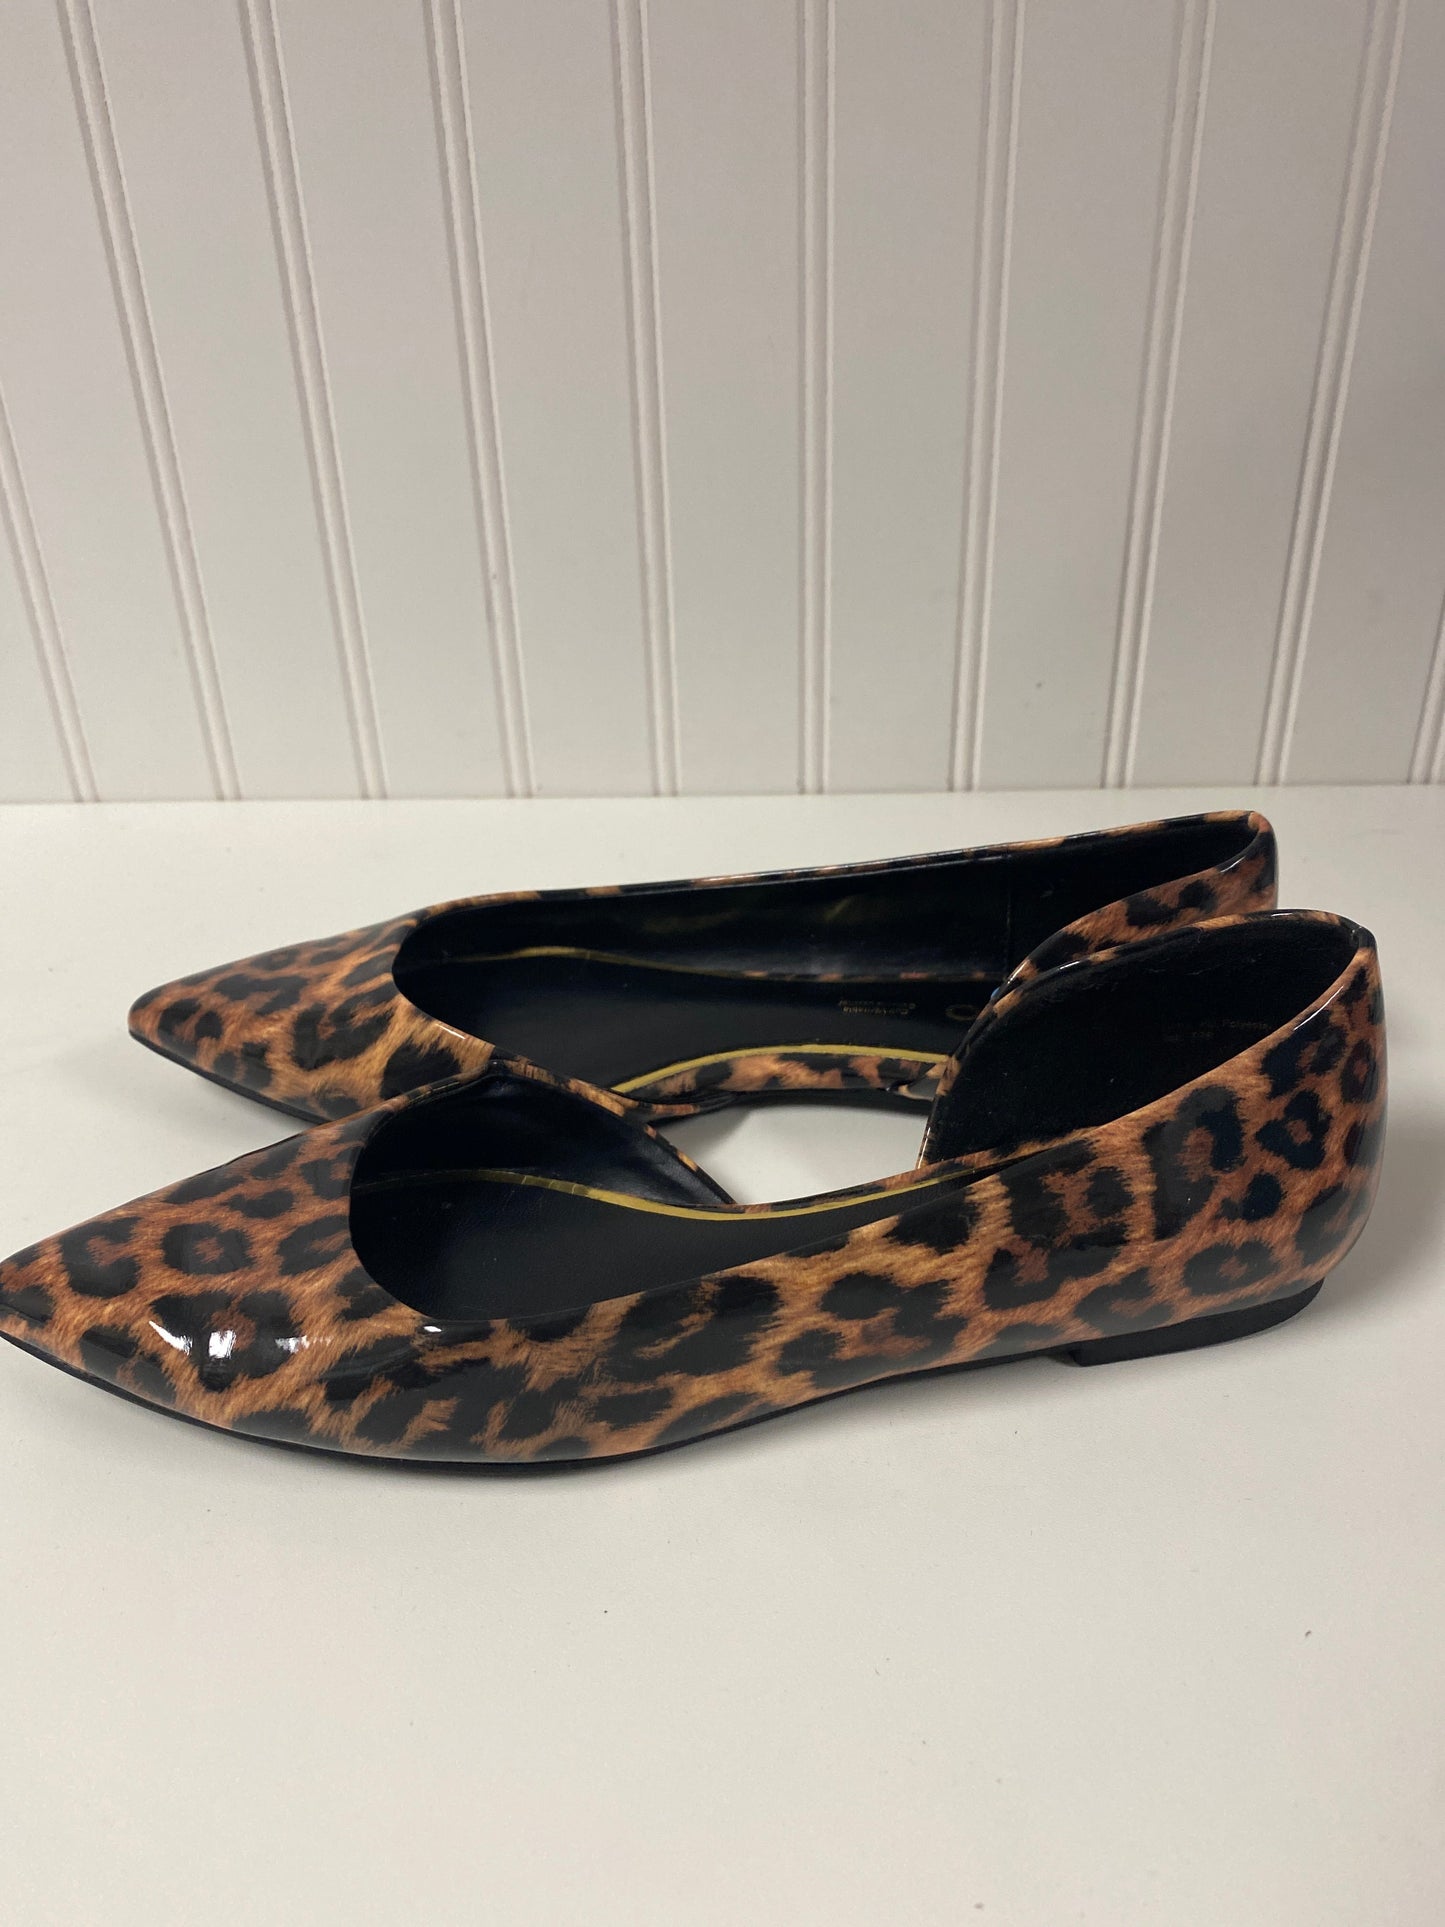 Animal Print Shoes Flats Aldo, Size 6